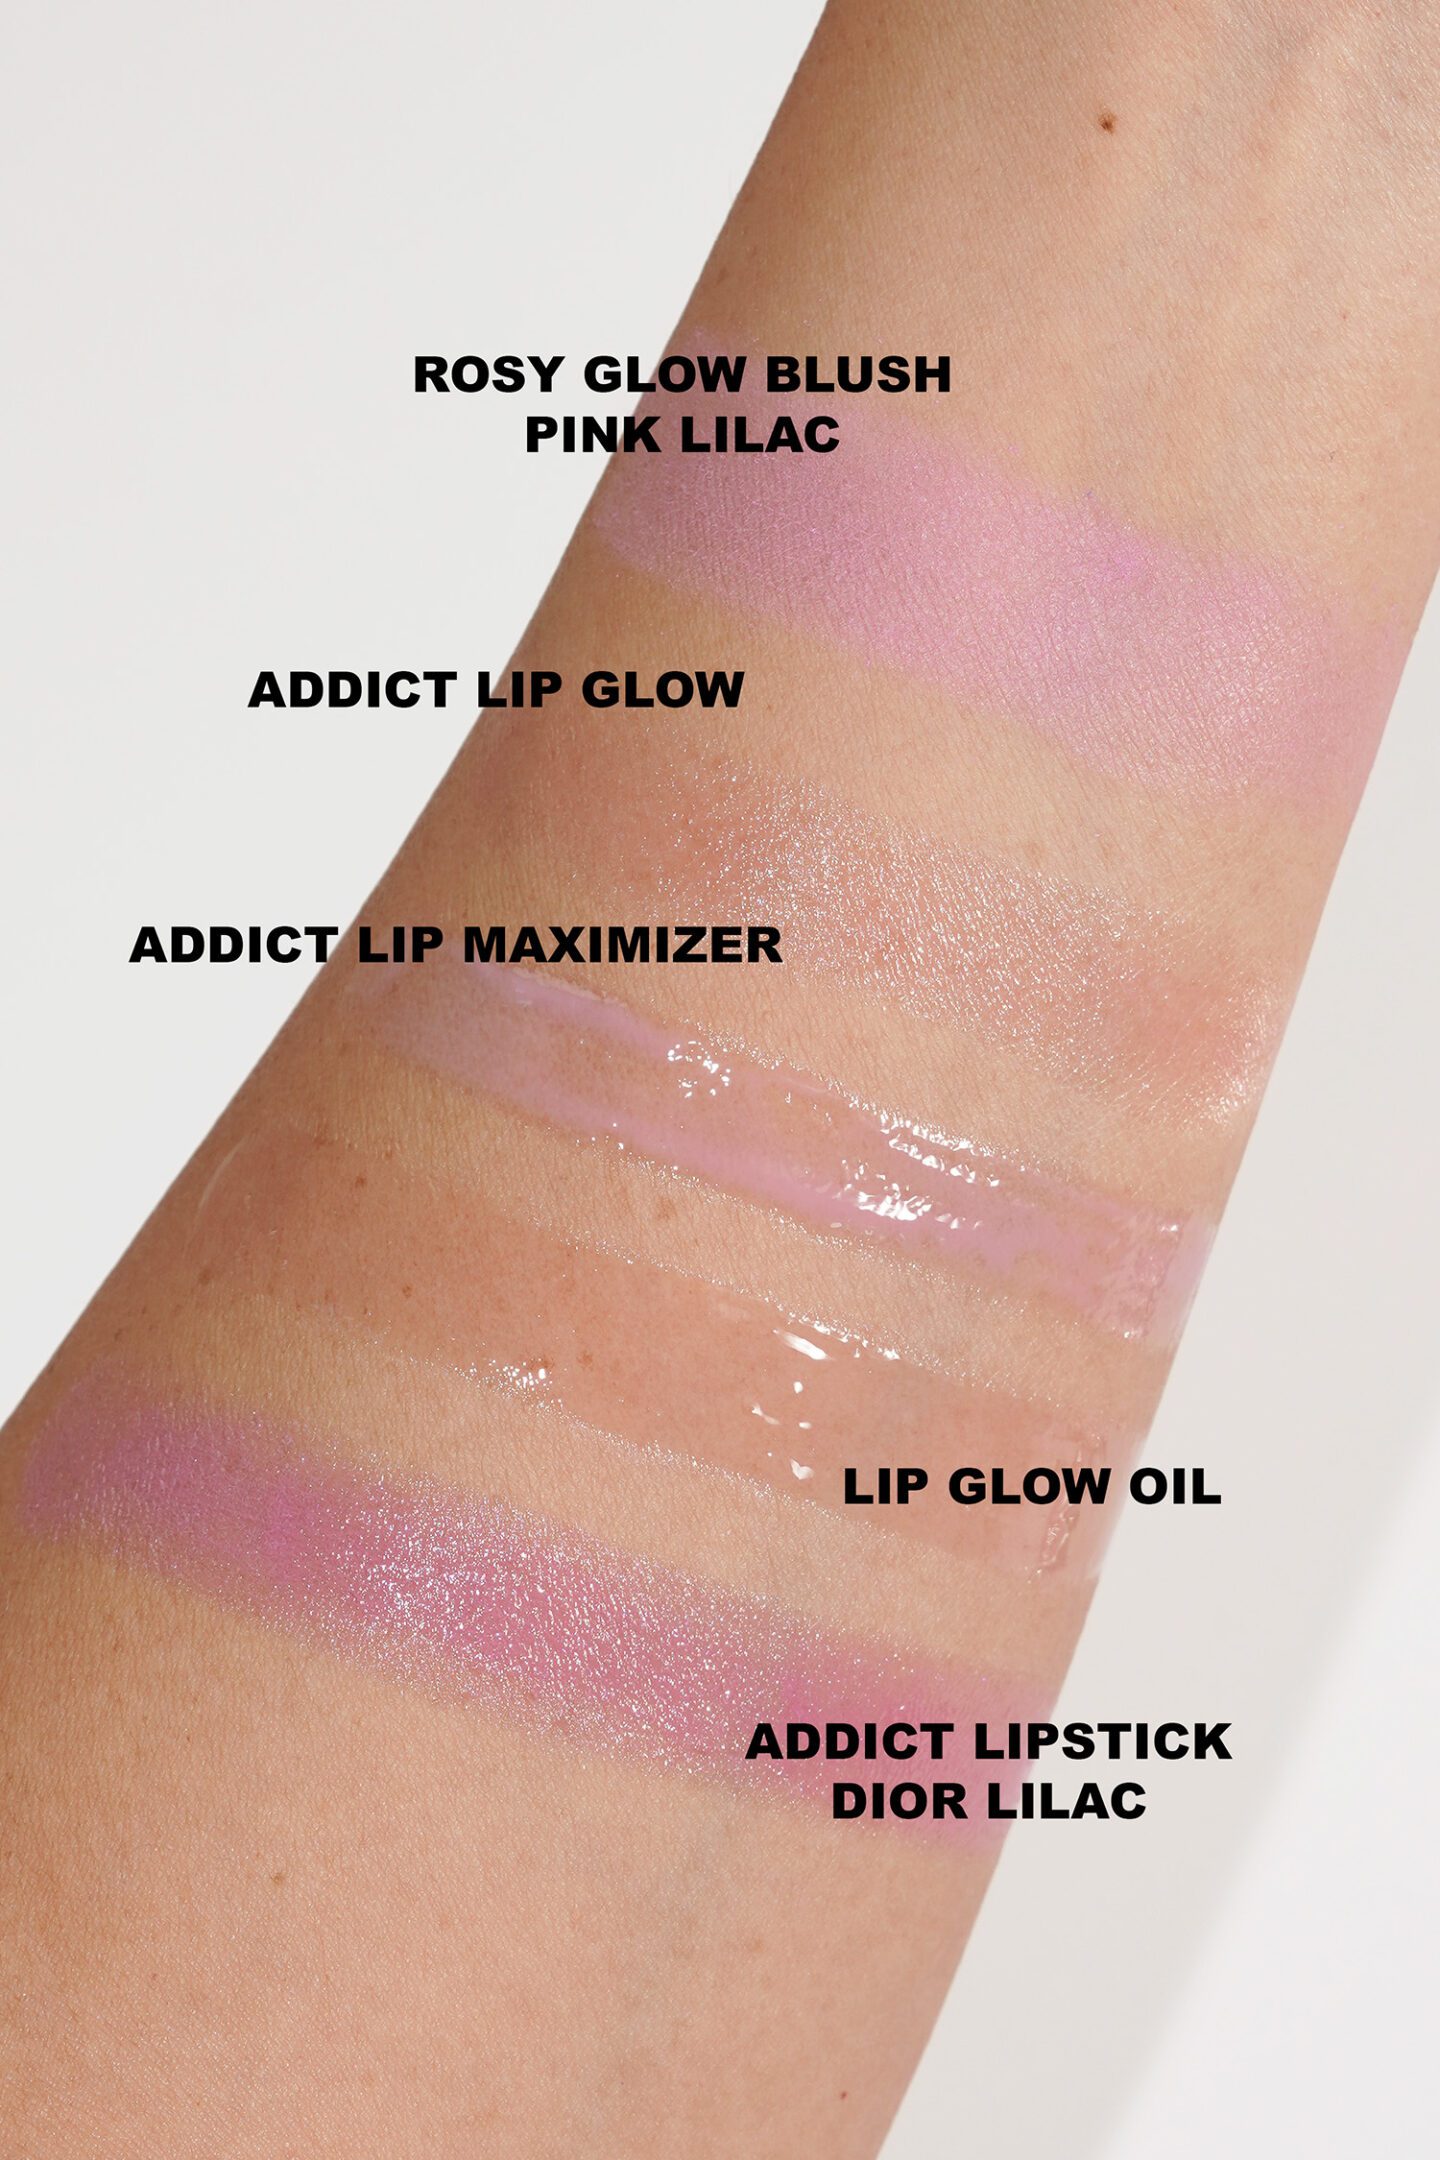 Dior Pink Lilac Rosy Glow Blush, Addict Lip Maximizer, Lip Glow, Lip Balm swatches